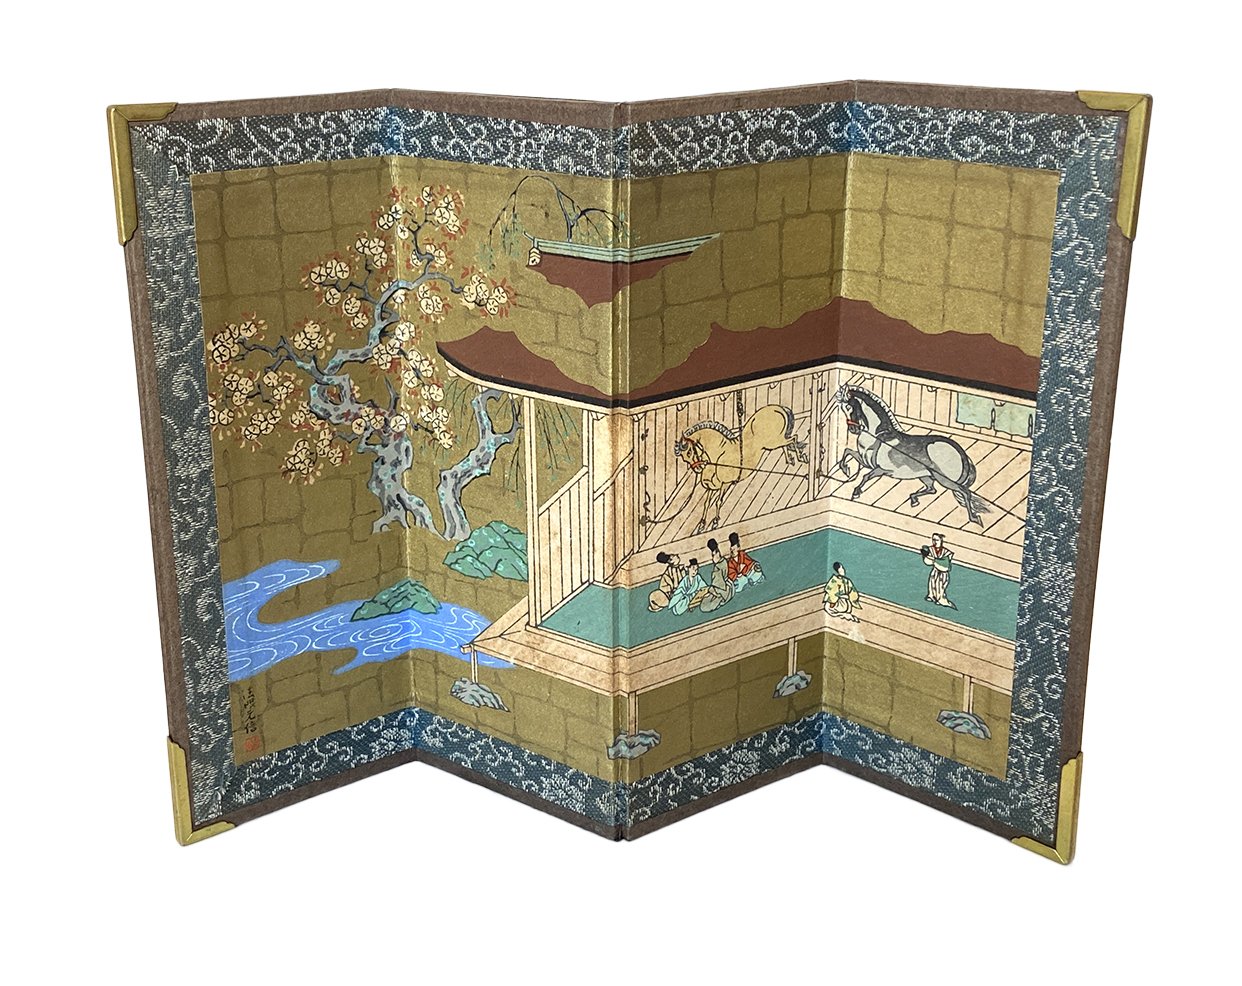 Miniature Japanese folding screen: $130